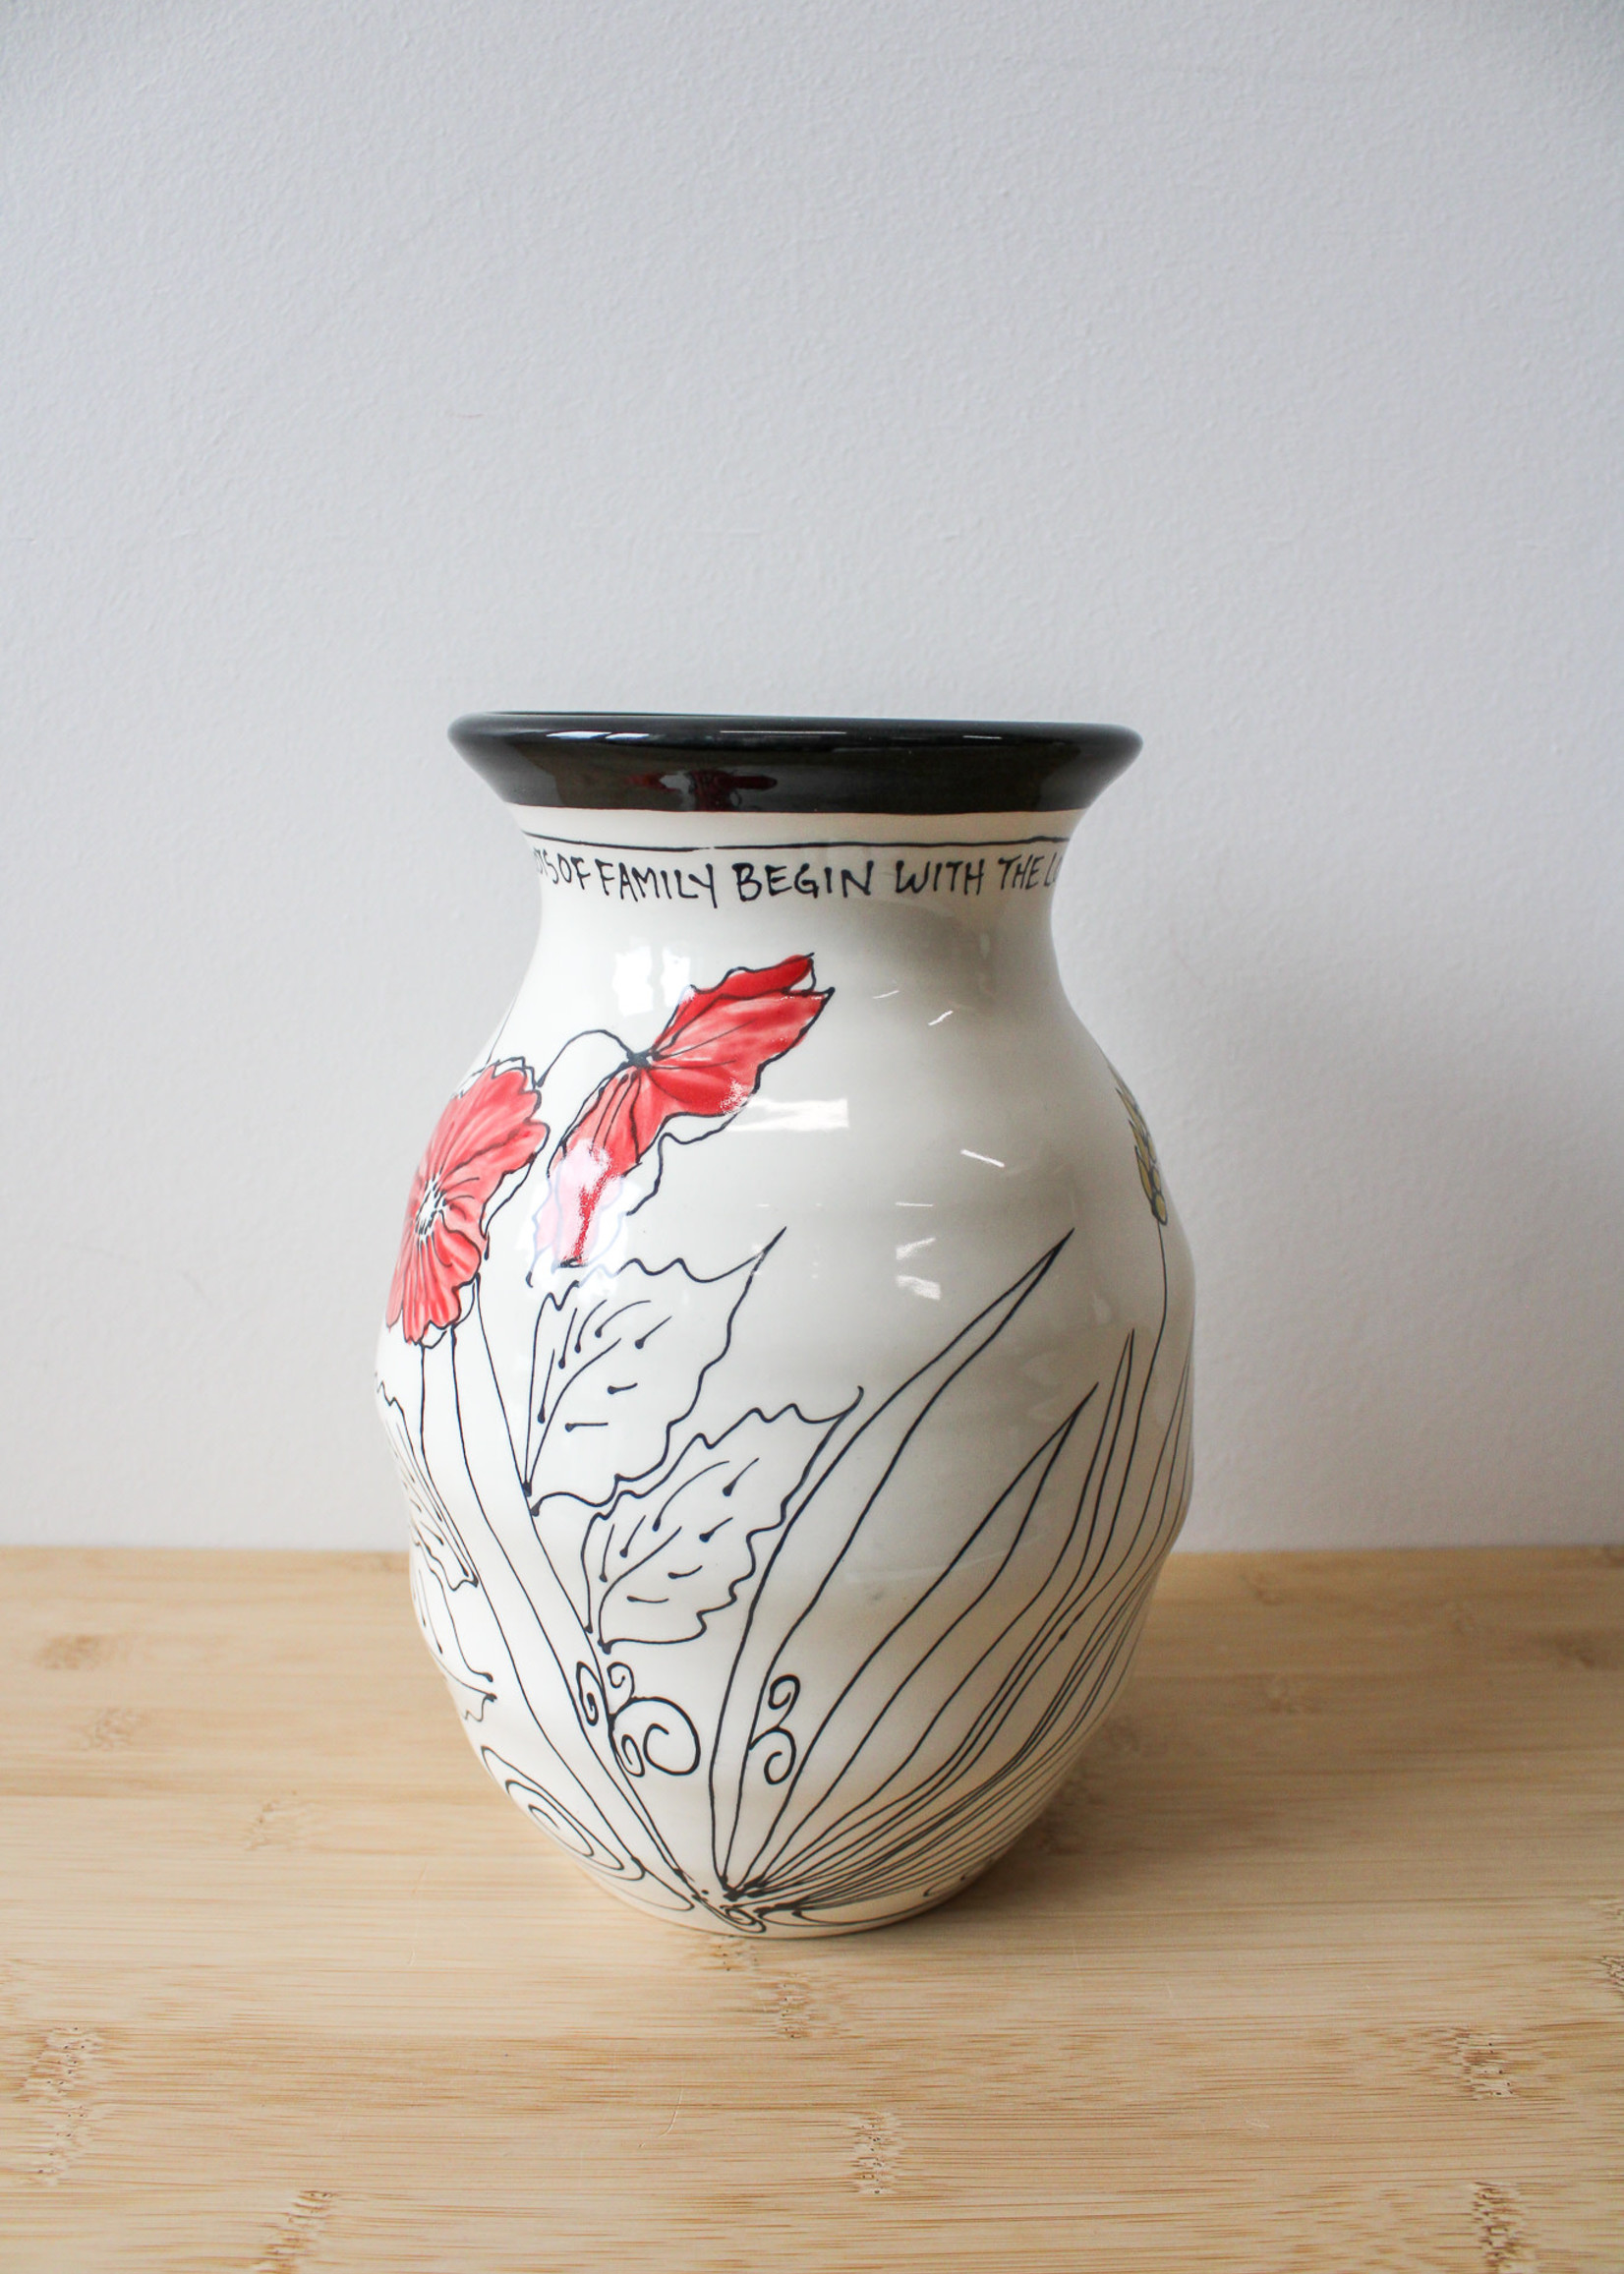 CERAMICS - Narrow Vase with Poppies & Wheat